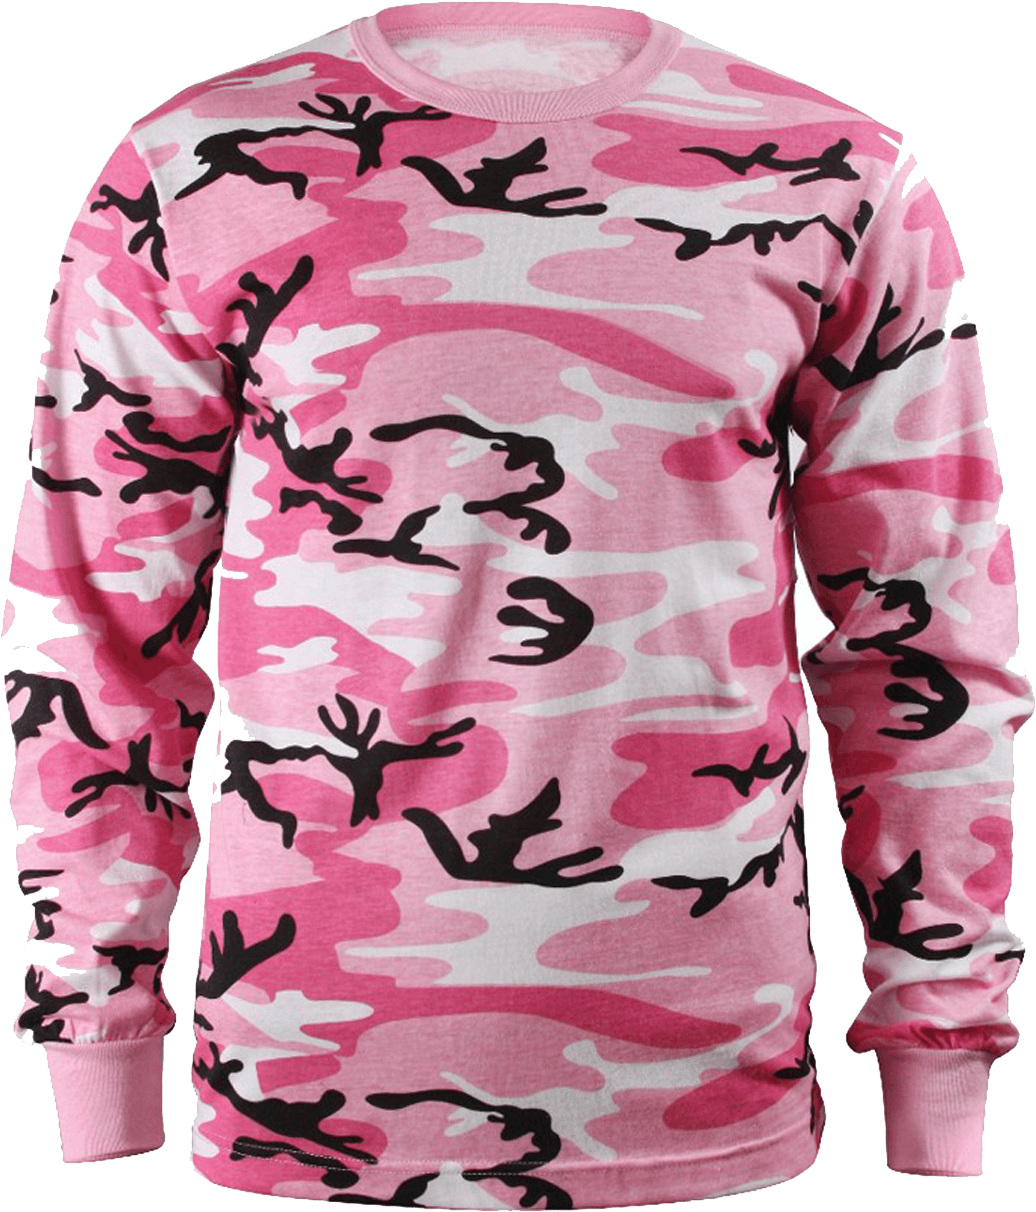 Pink Camouflage Sweatshirt Pattern